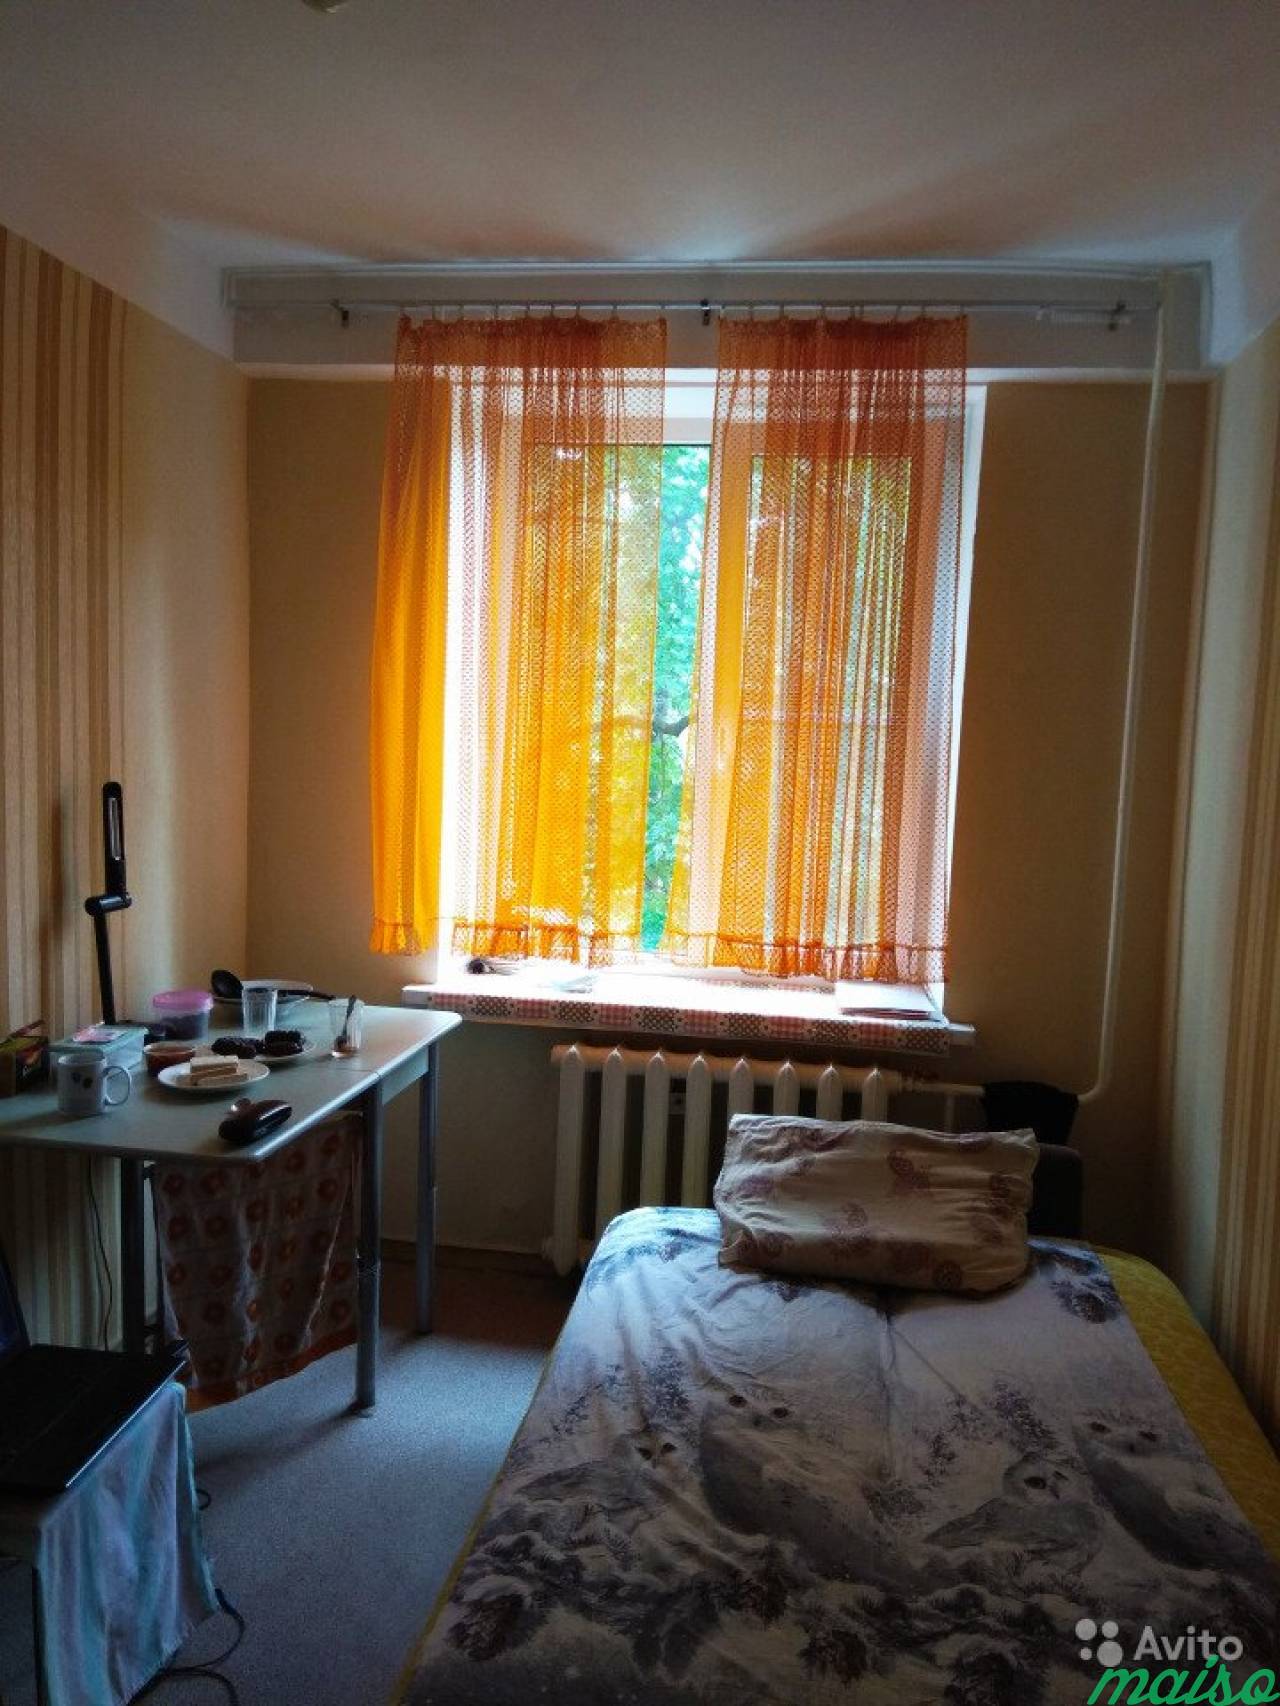 Комната 12 м² в 3-к, 2/5 эт. в Санкт-Петербурге. Фото 1